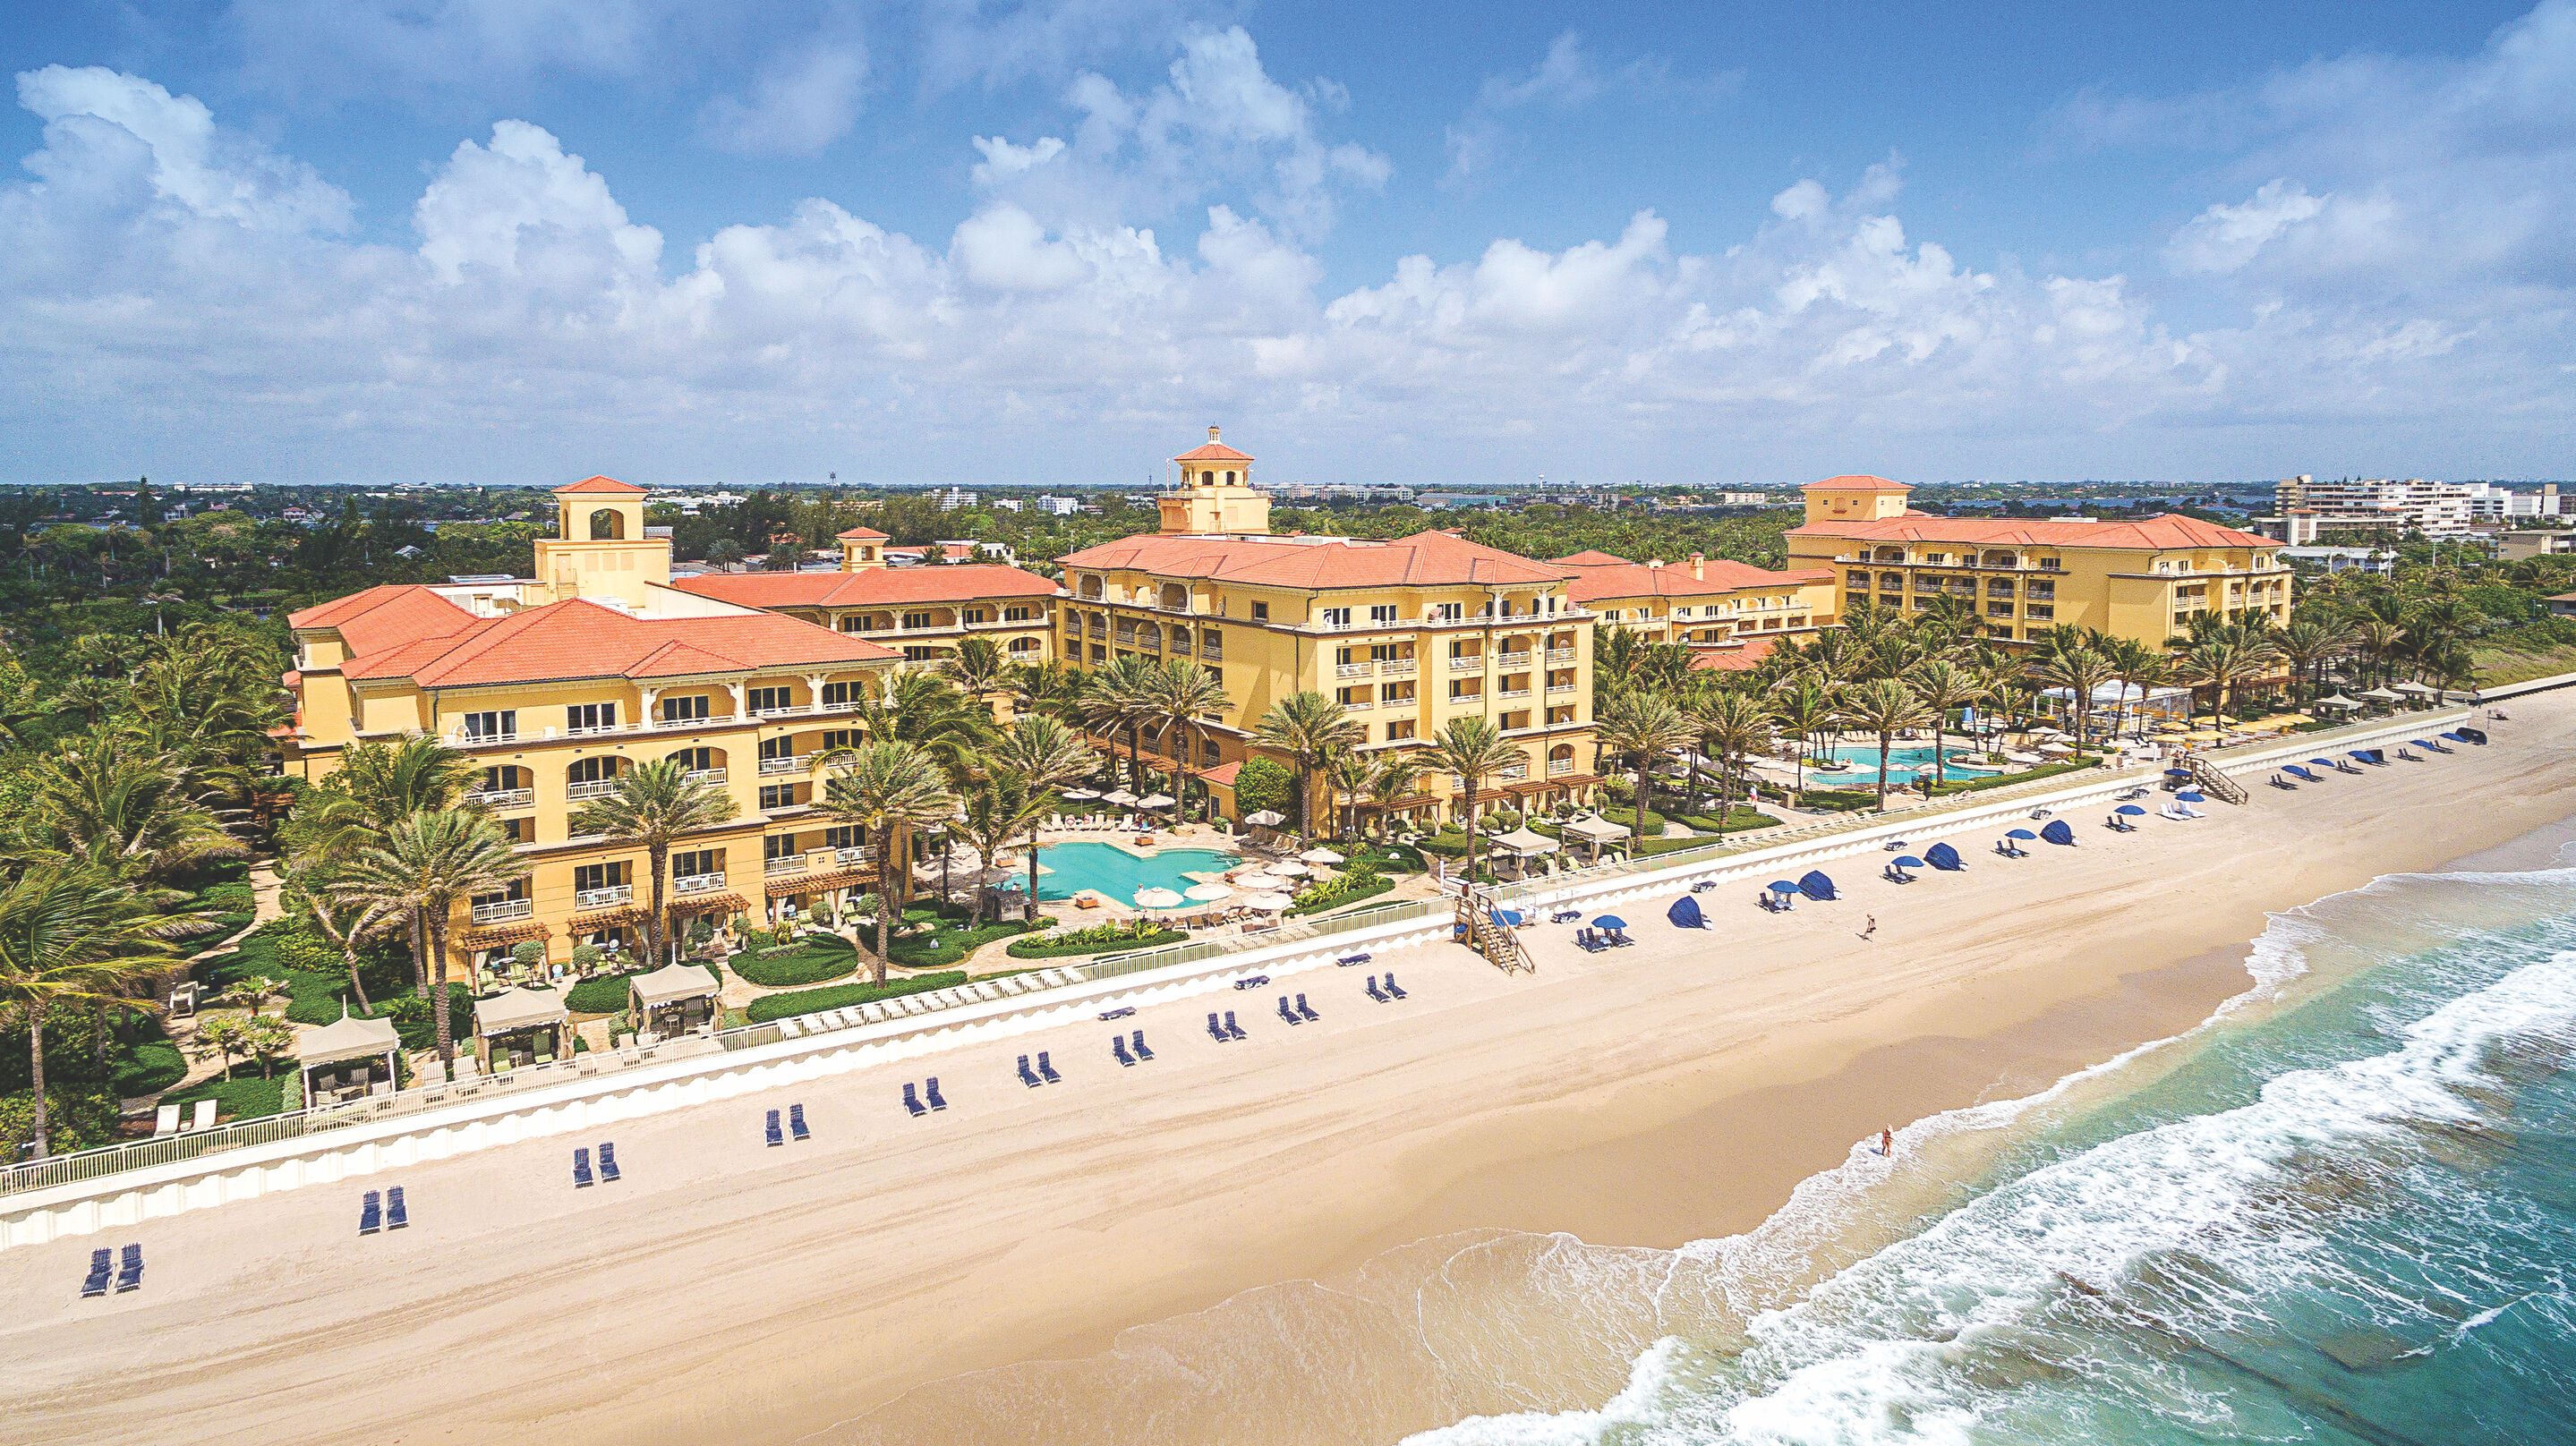 West palm beach 5 star hotels